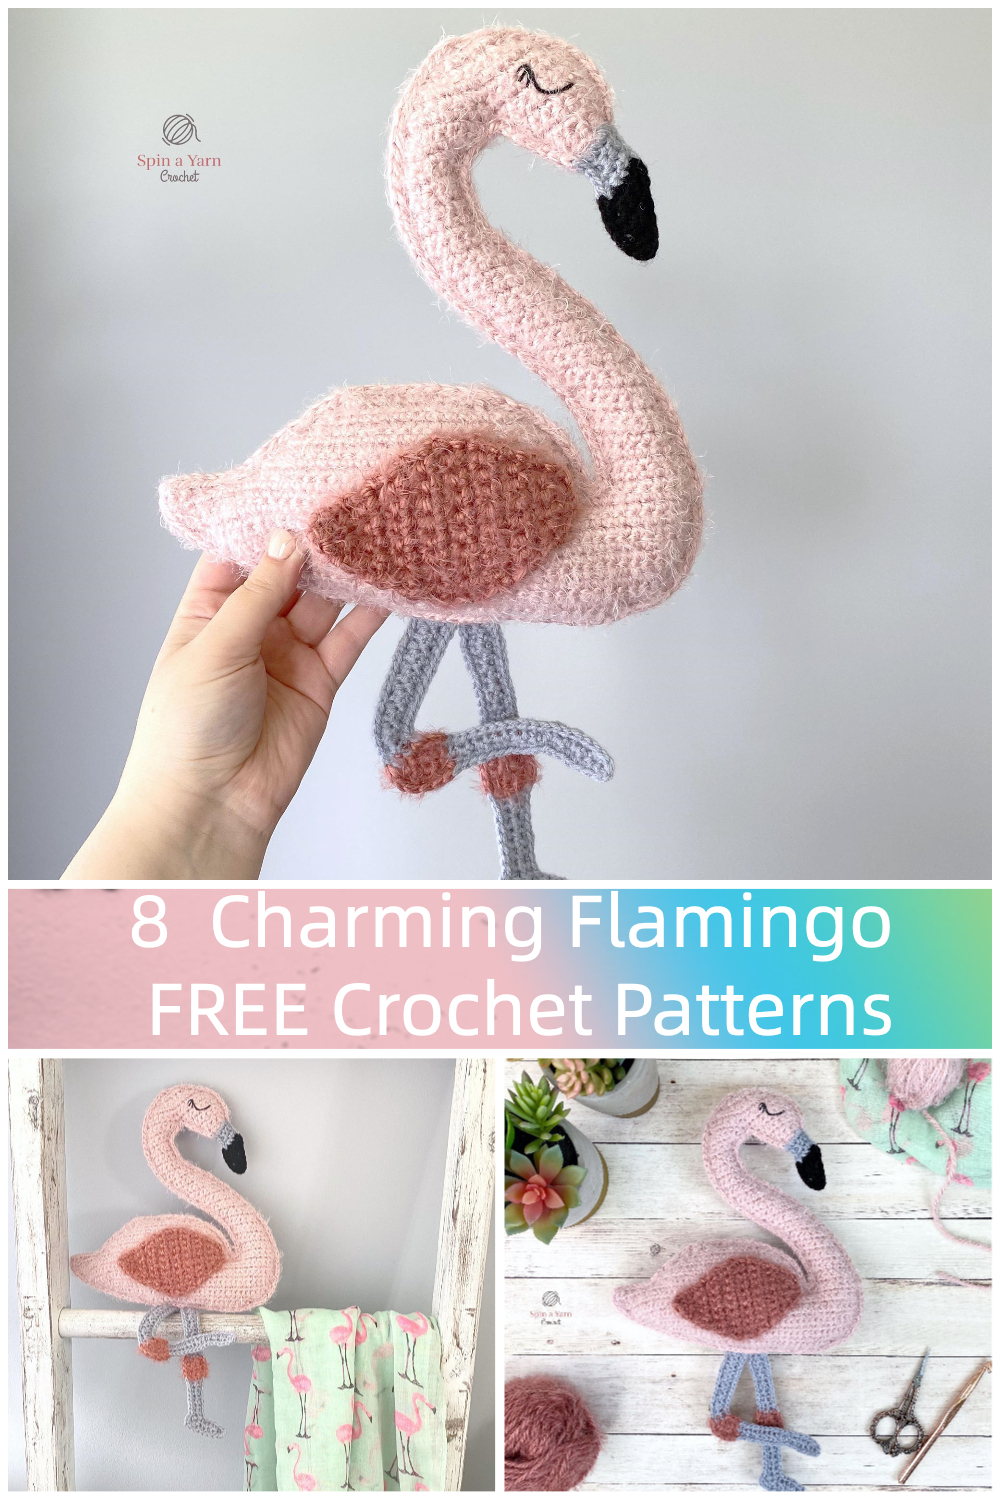 8 Charming Flamingo FREE Crochet Patterns